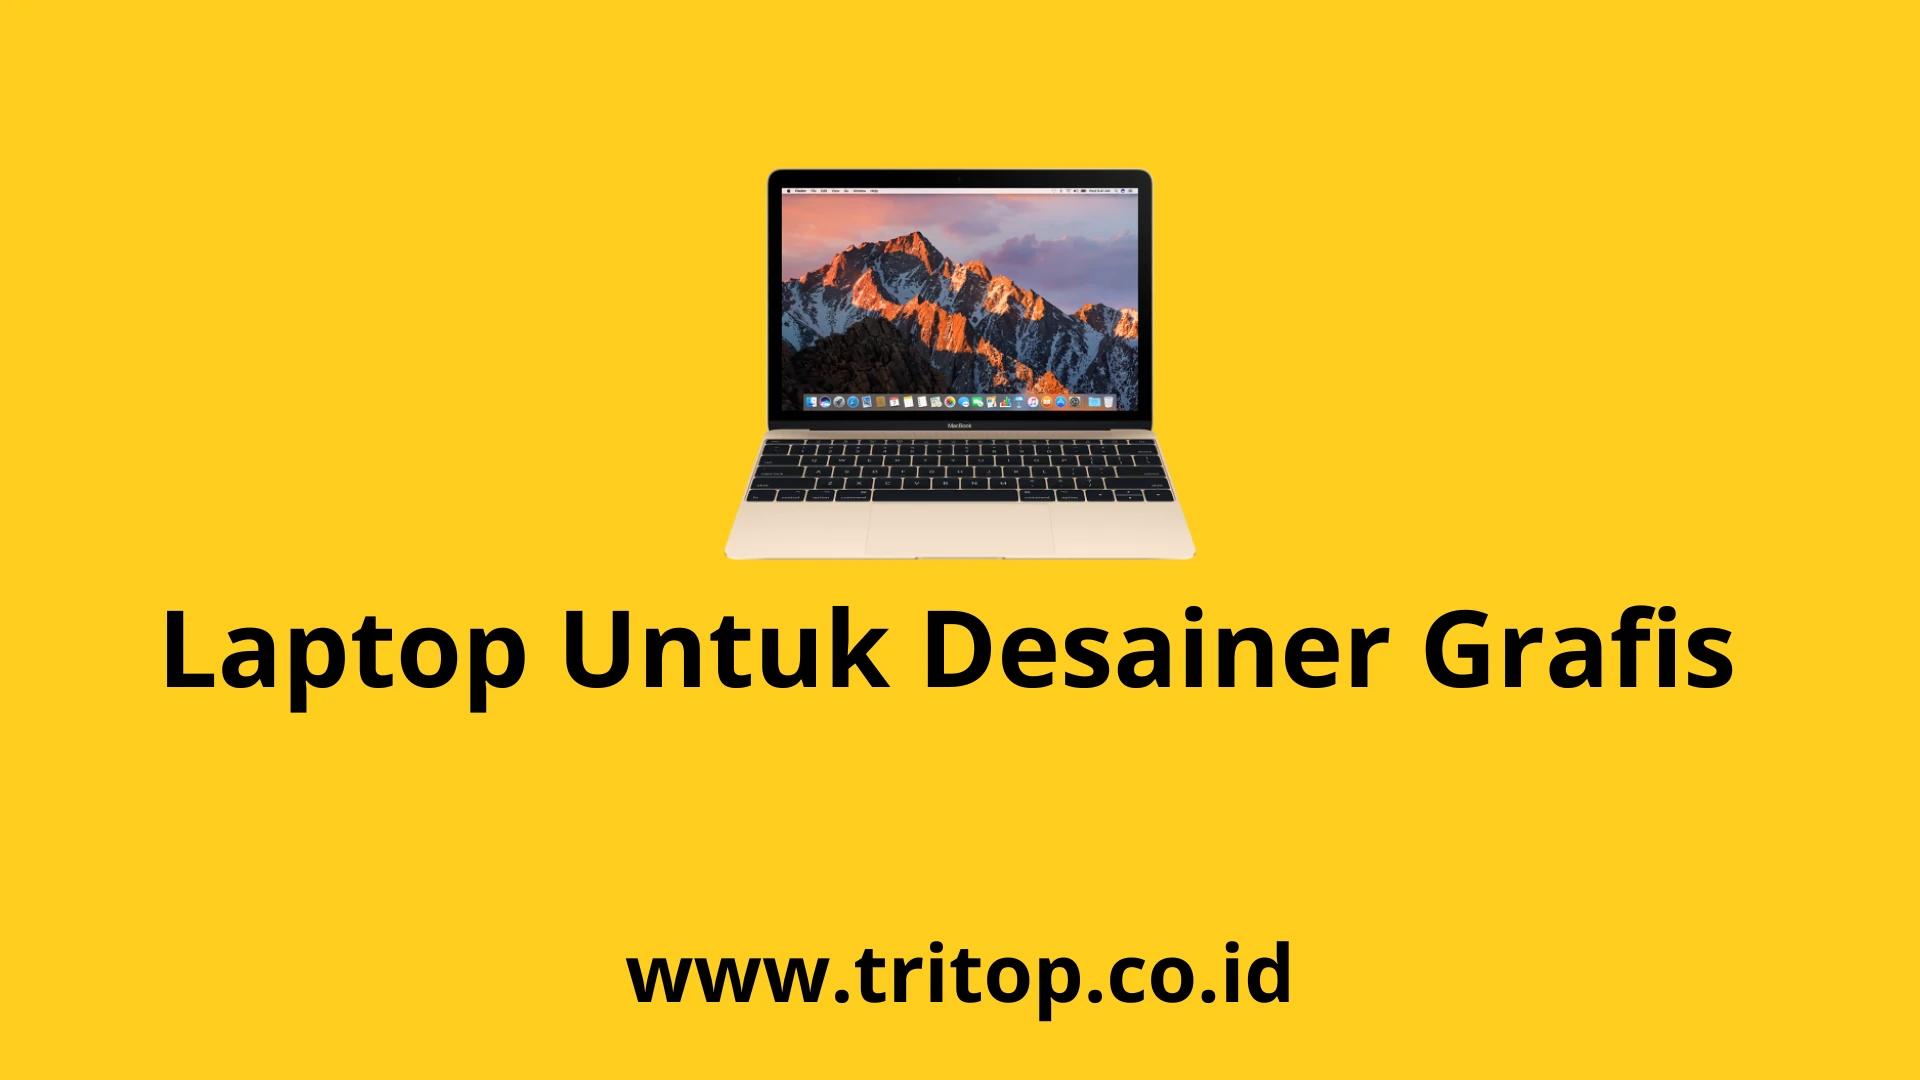 Laptop Untuk Desainer Grafis Tritop.co.id